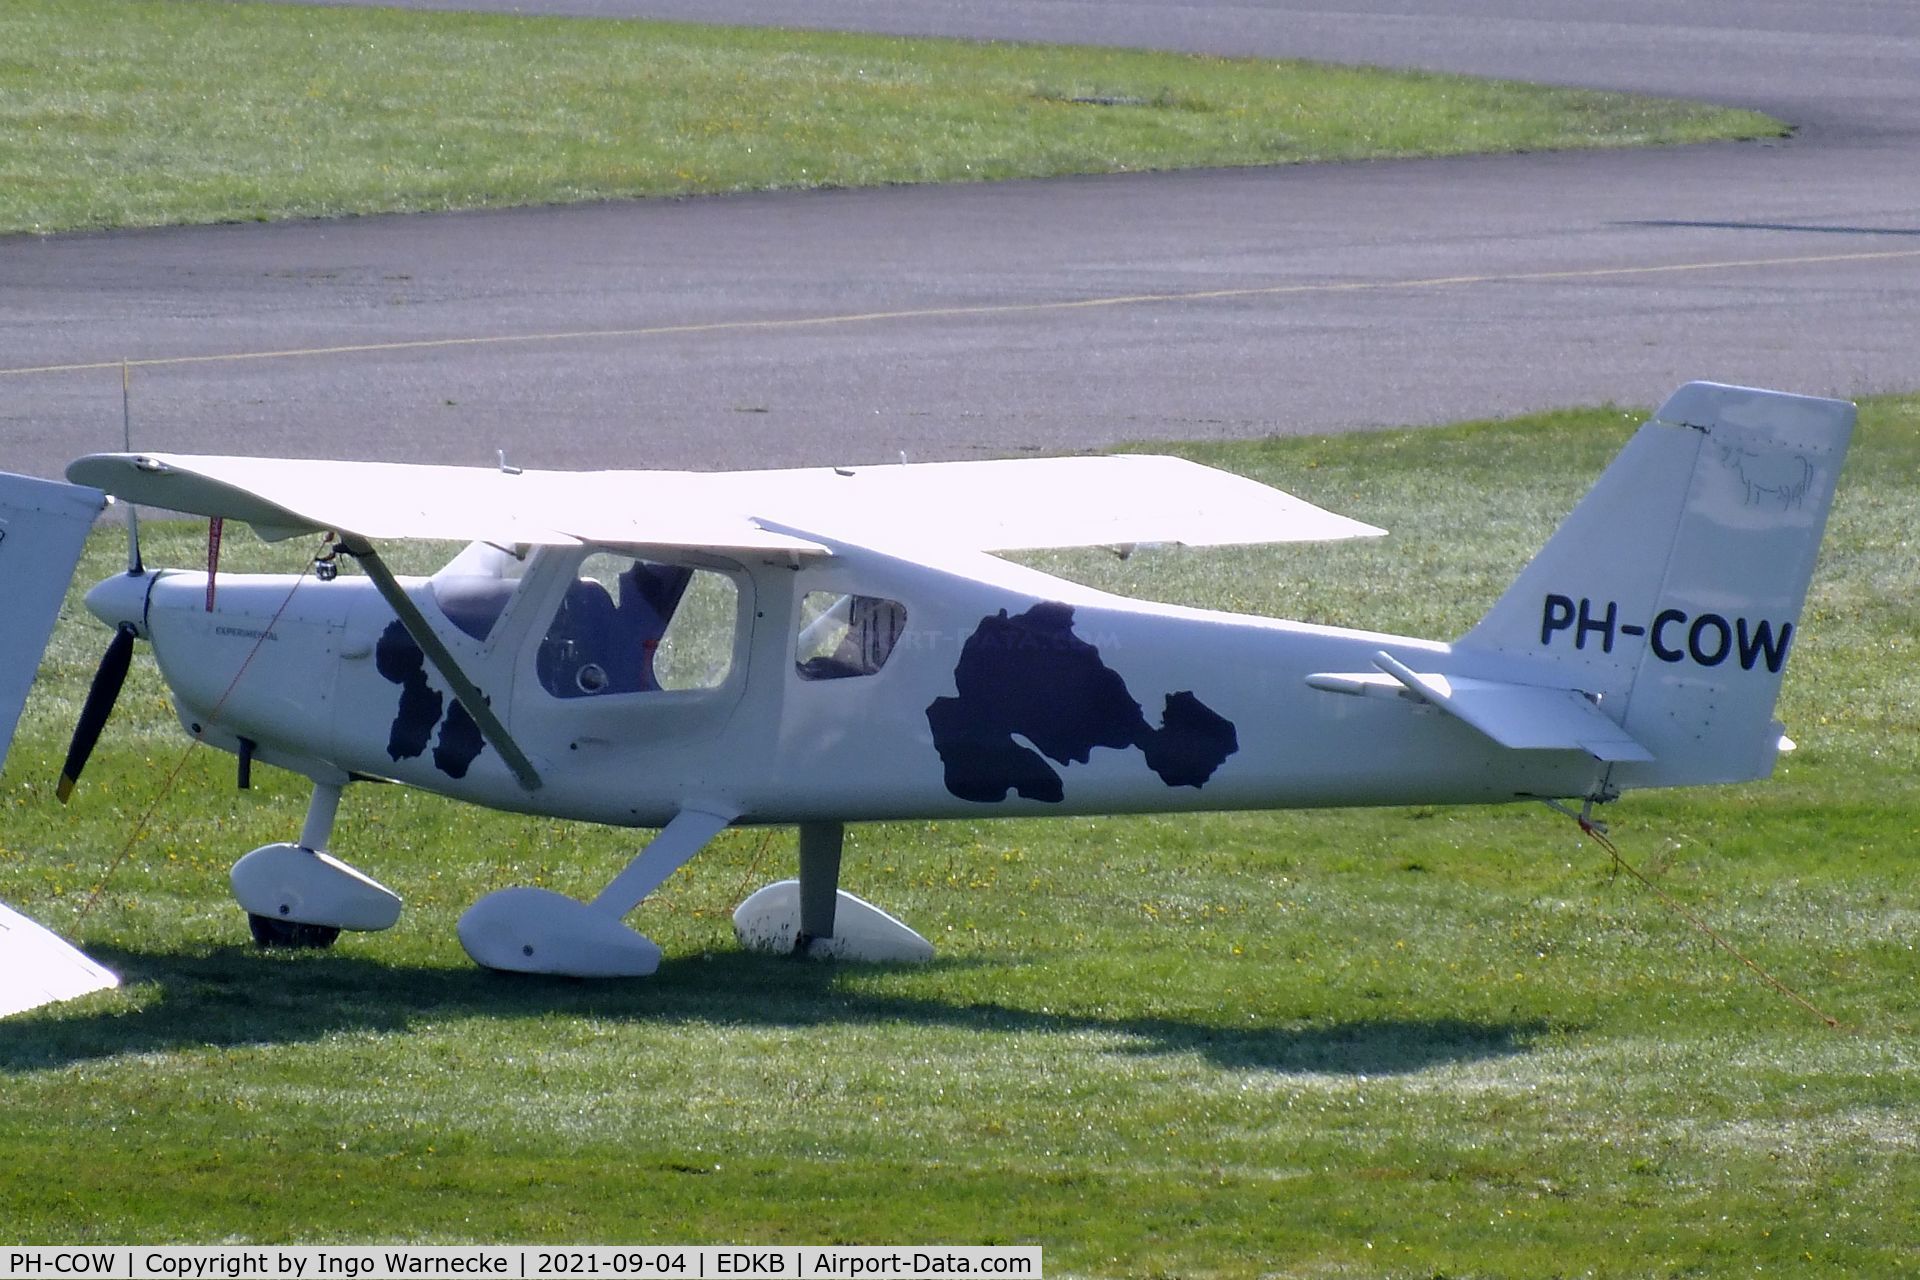 PH-COW, Ultravia Pelican PL C/N 649, Ultravia Pelican PL at Bonn-Hangelar airfield during the Grumman Fly-in 2021